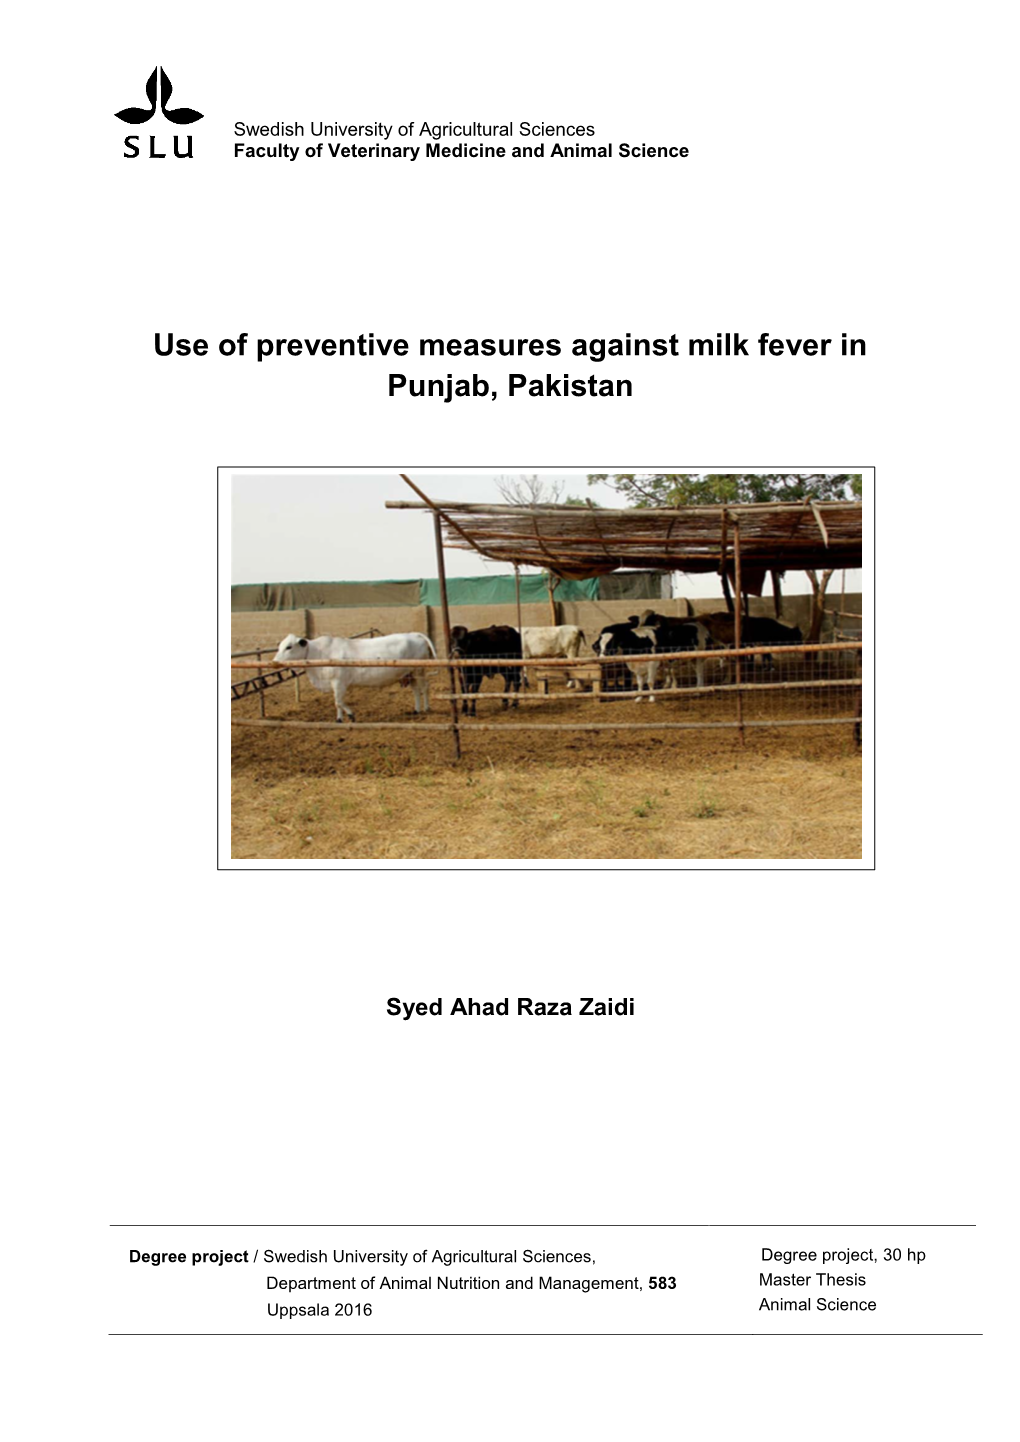 Use of Preventive Measures Against Milk Fever in Punjab, Pakistan